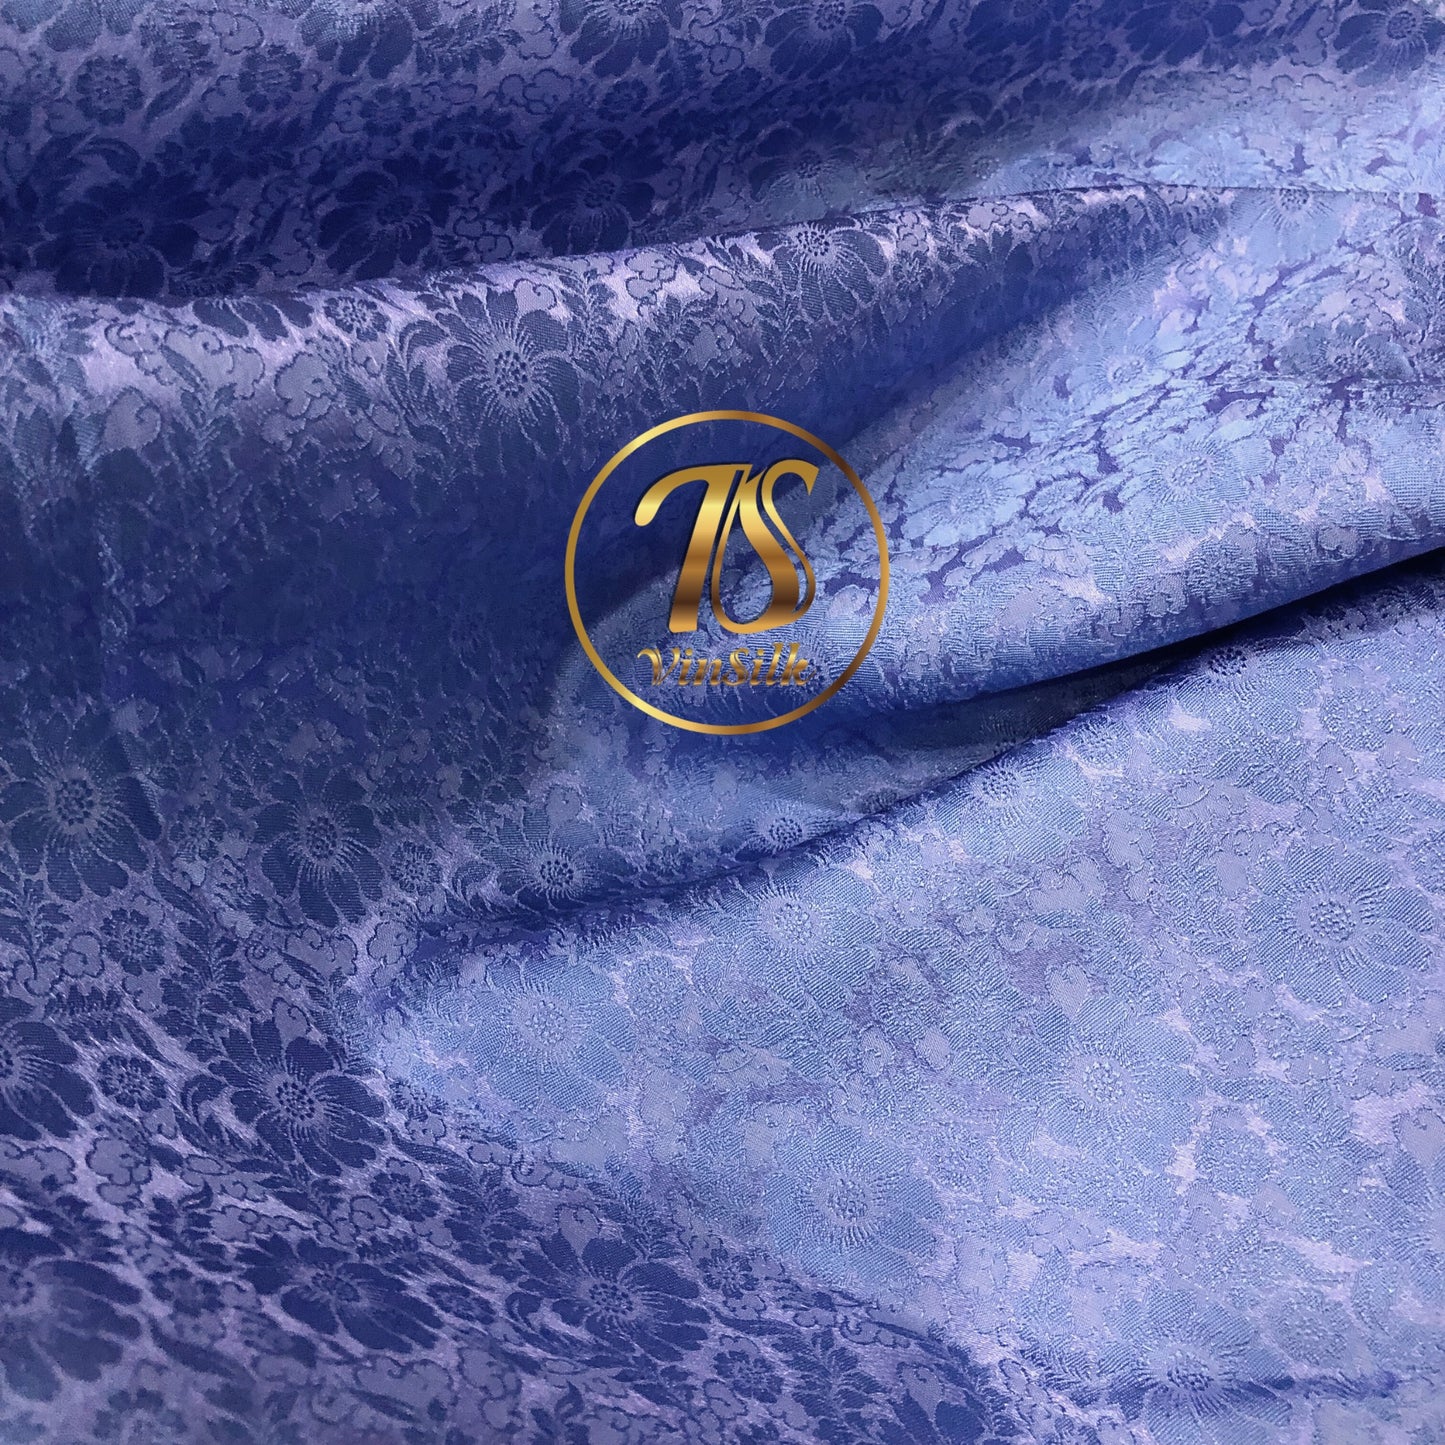 Mulberry Silk Floral Fabric – Chrysanthemum Pattern – Silk for Sewing - Purple Silk Fabric